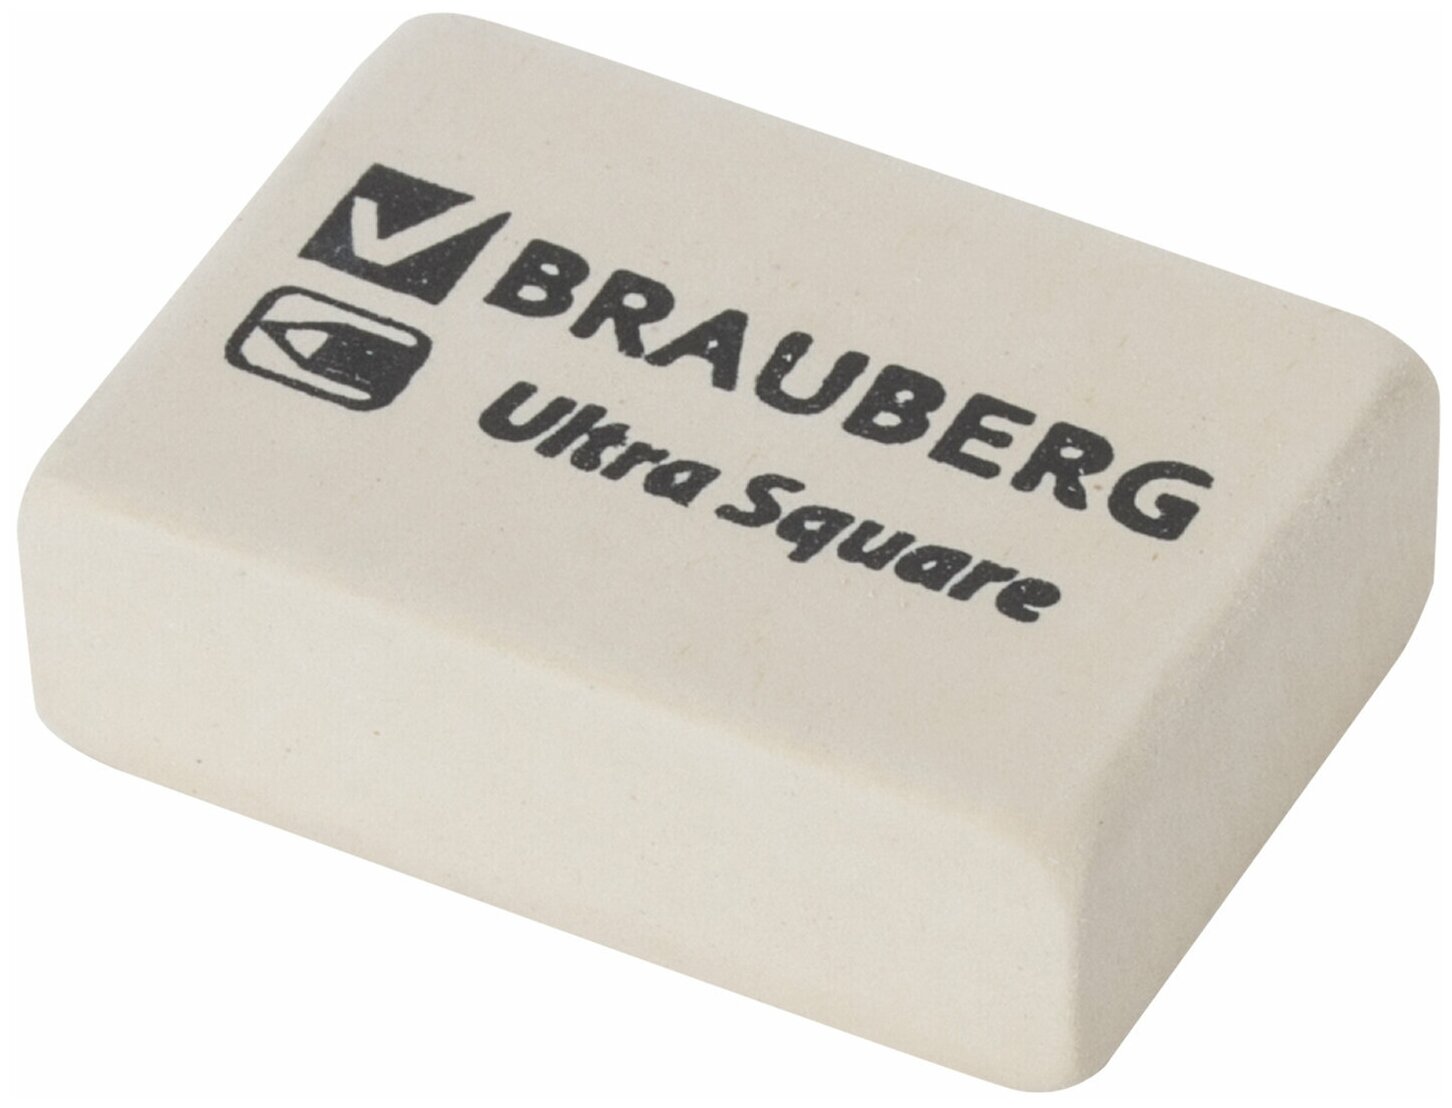 Ластик BRAUBERG "Ultra Square", 26х18х8 мм, белый, натуральный каучук, 228707 - 10 шт.